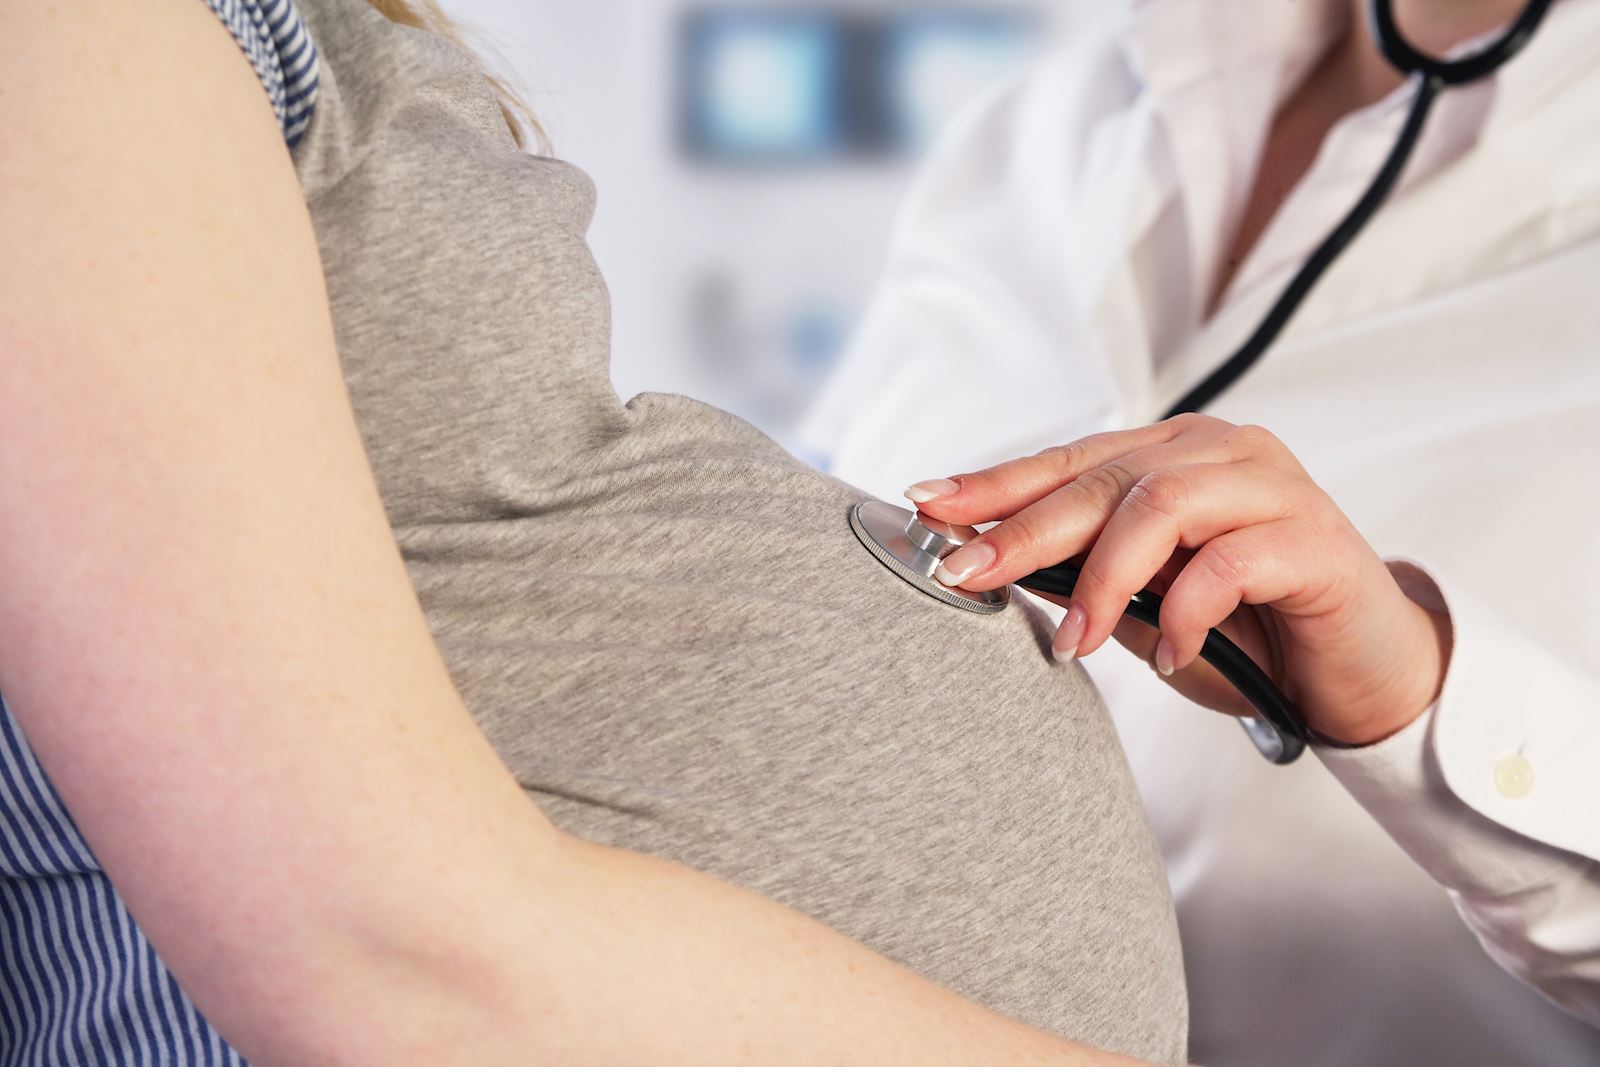 Tackling America's rising maternal mortality rate